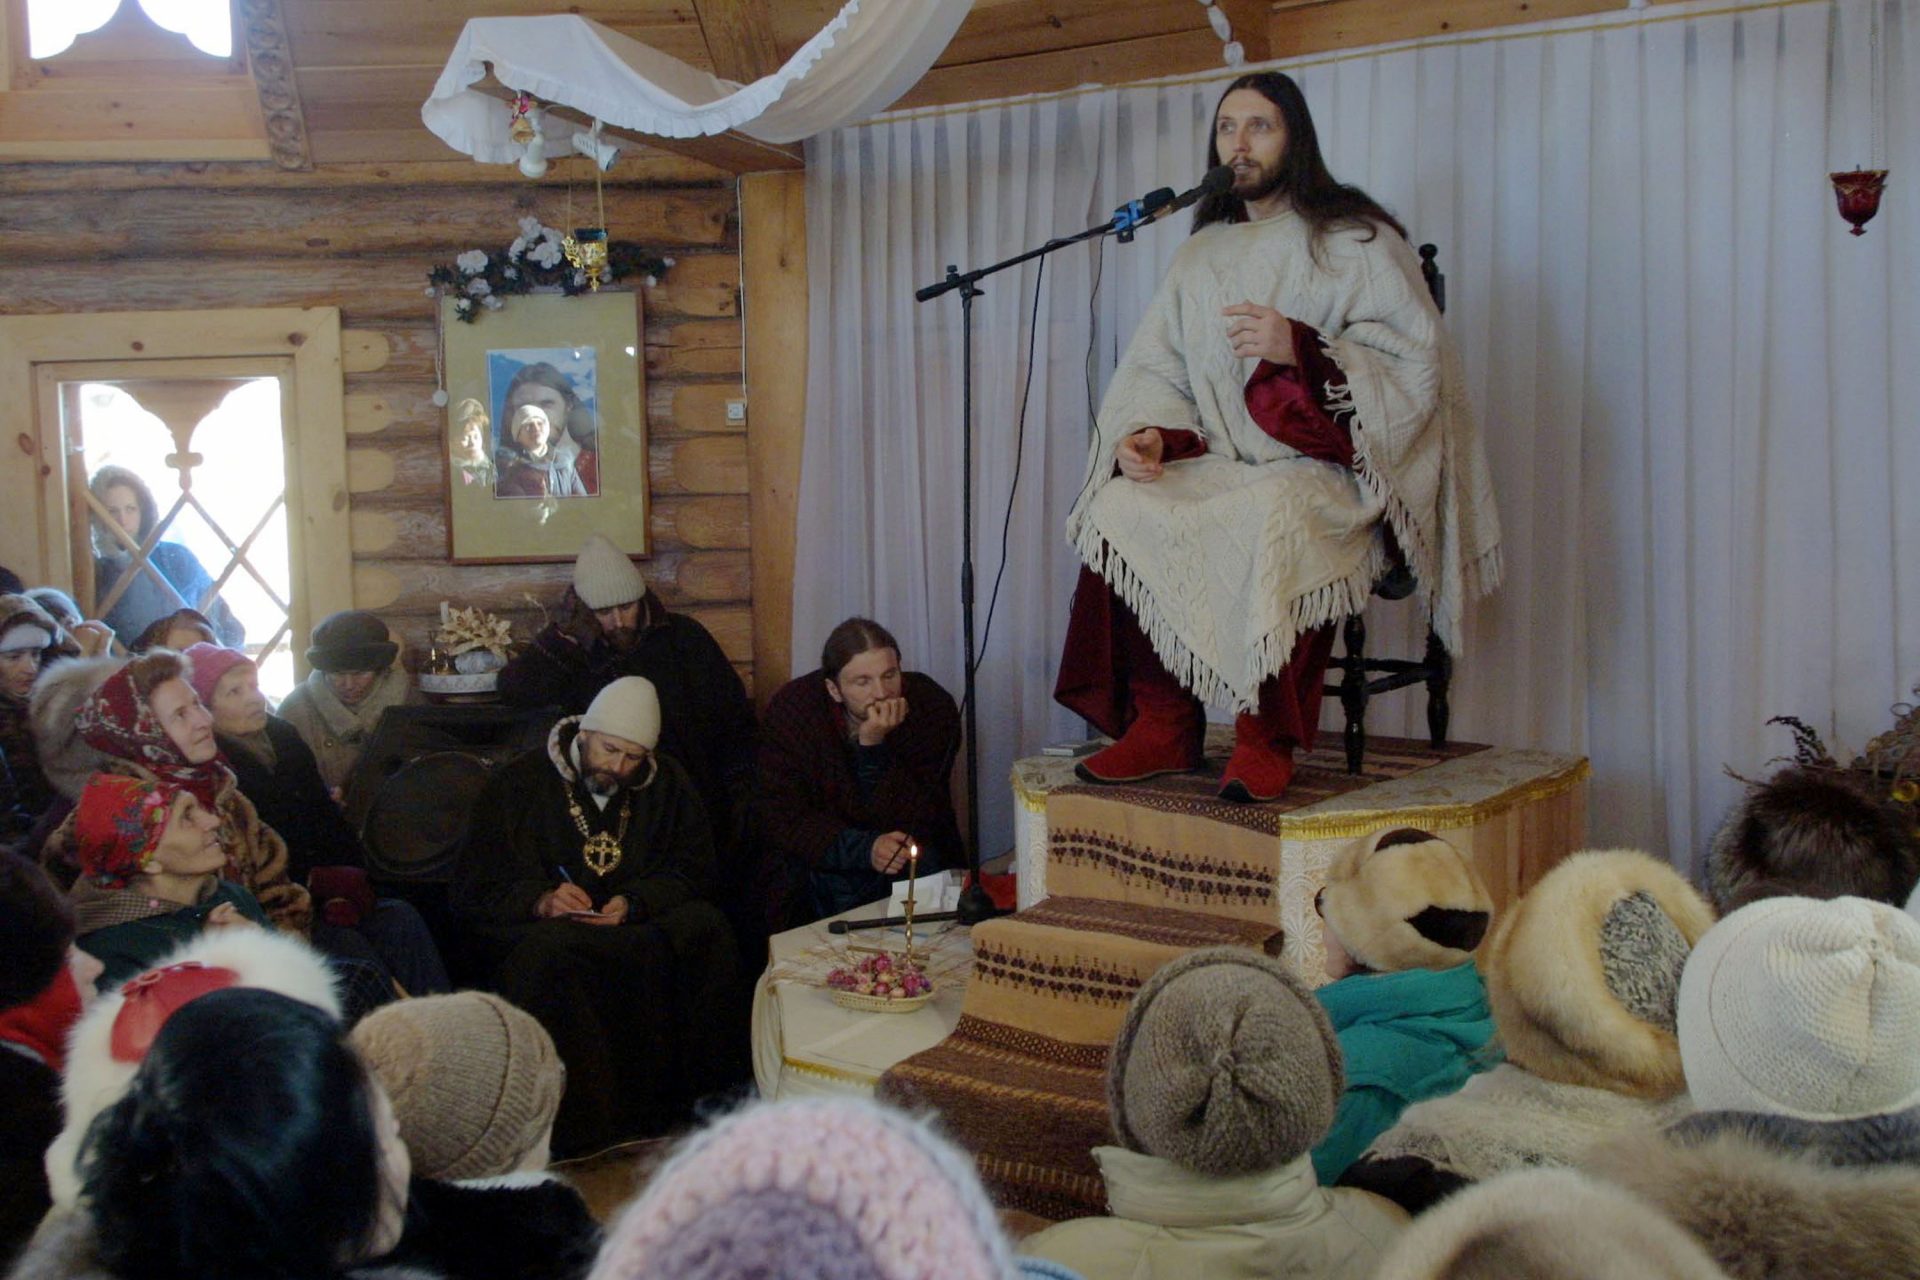 Meet 'Siberian Jesus': the bizarre story of man who believes he is Jesus Christ